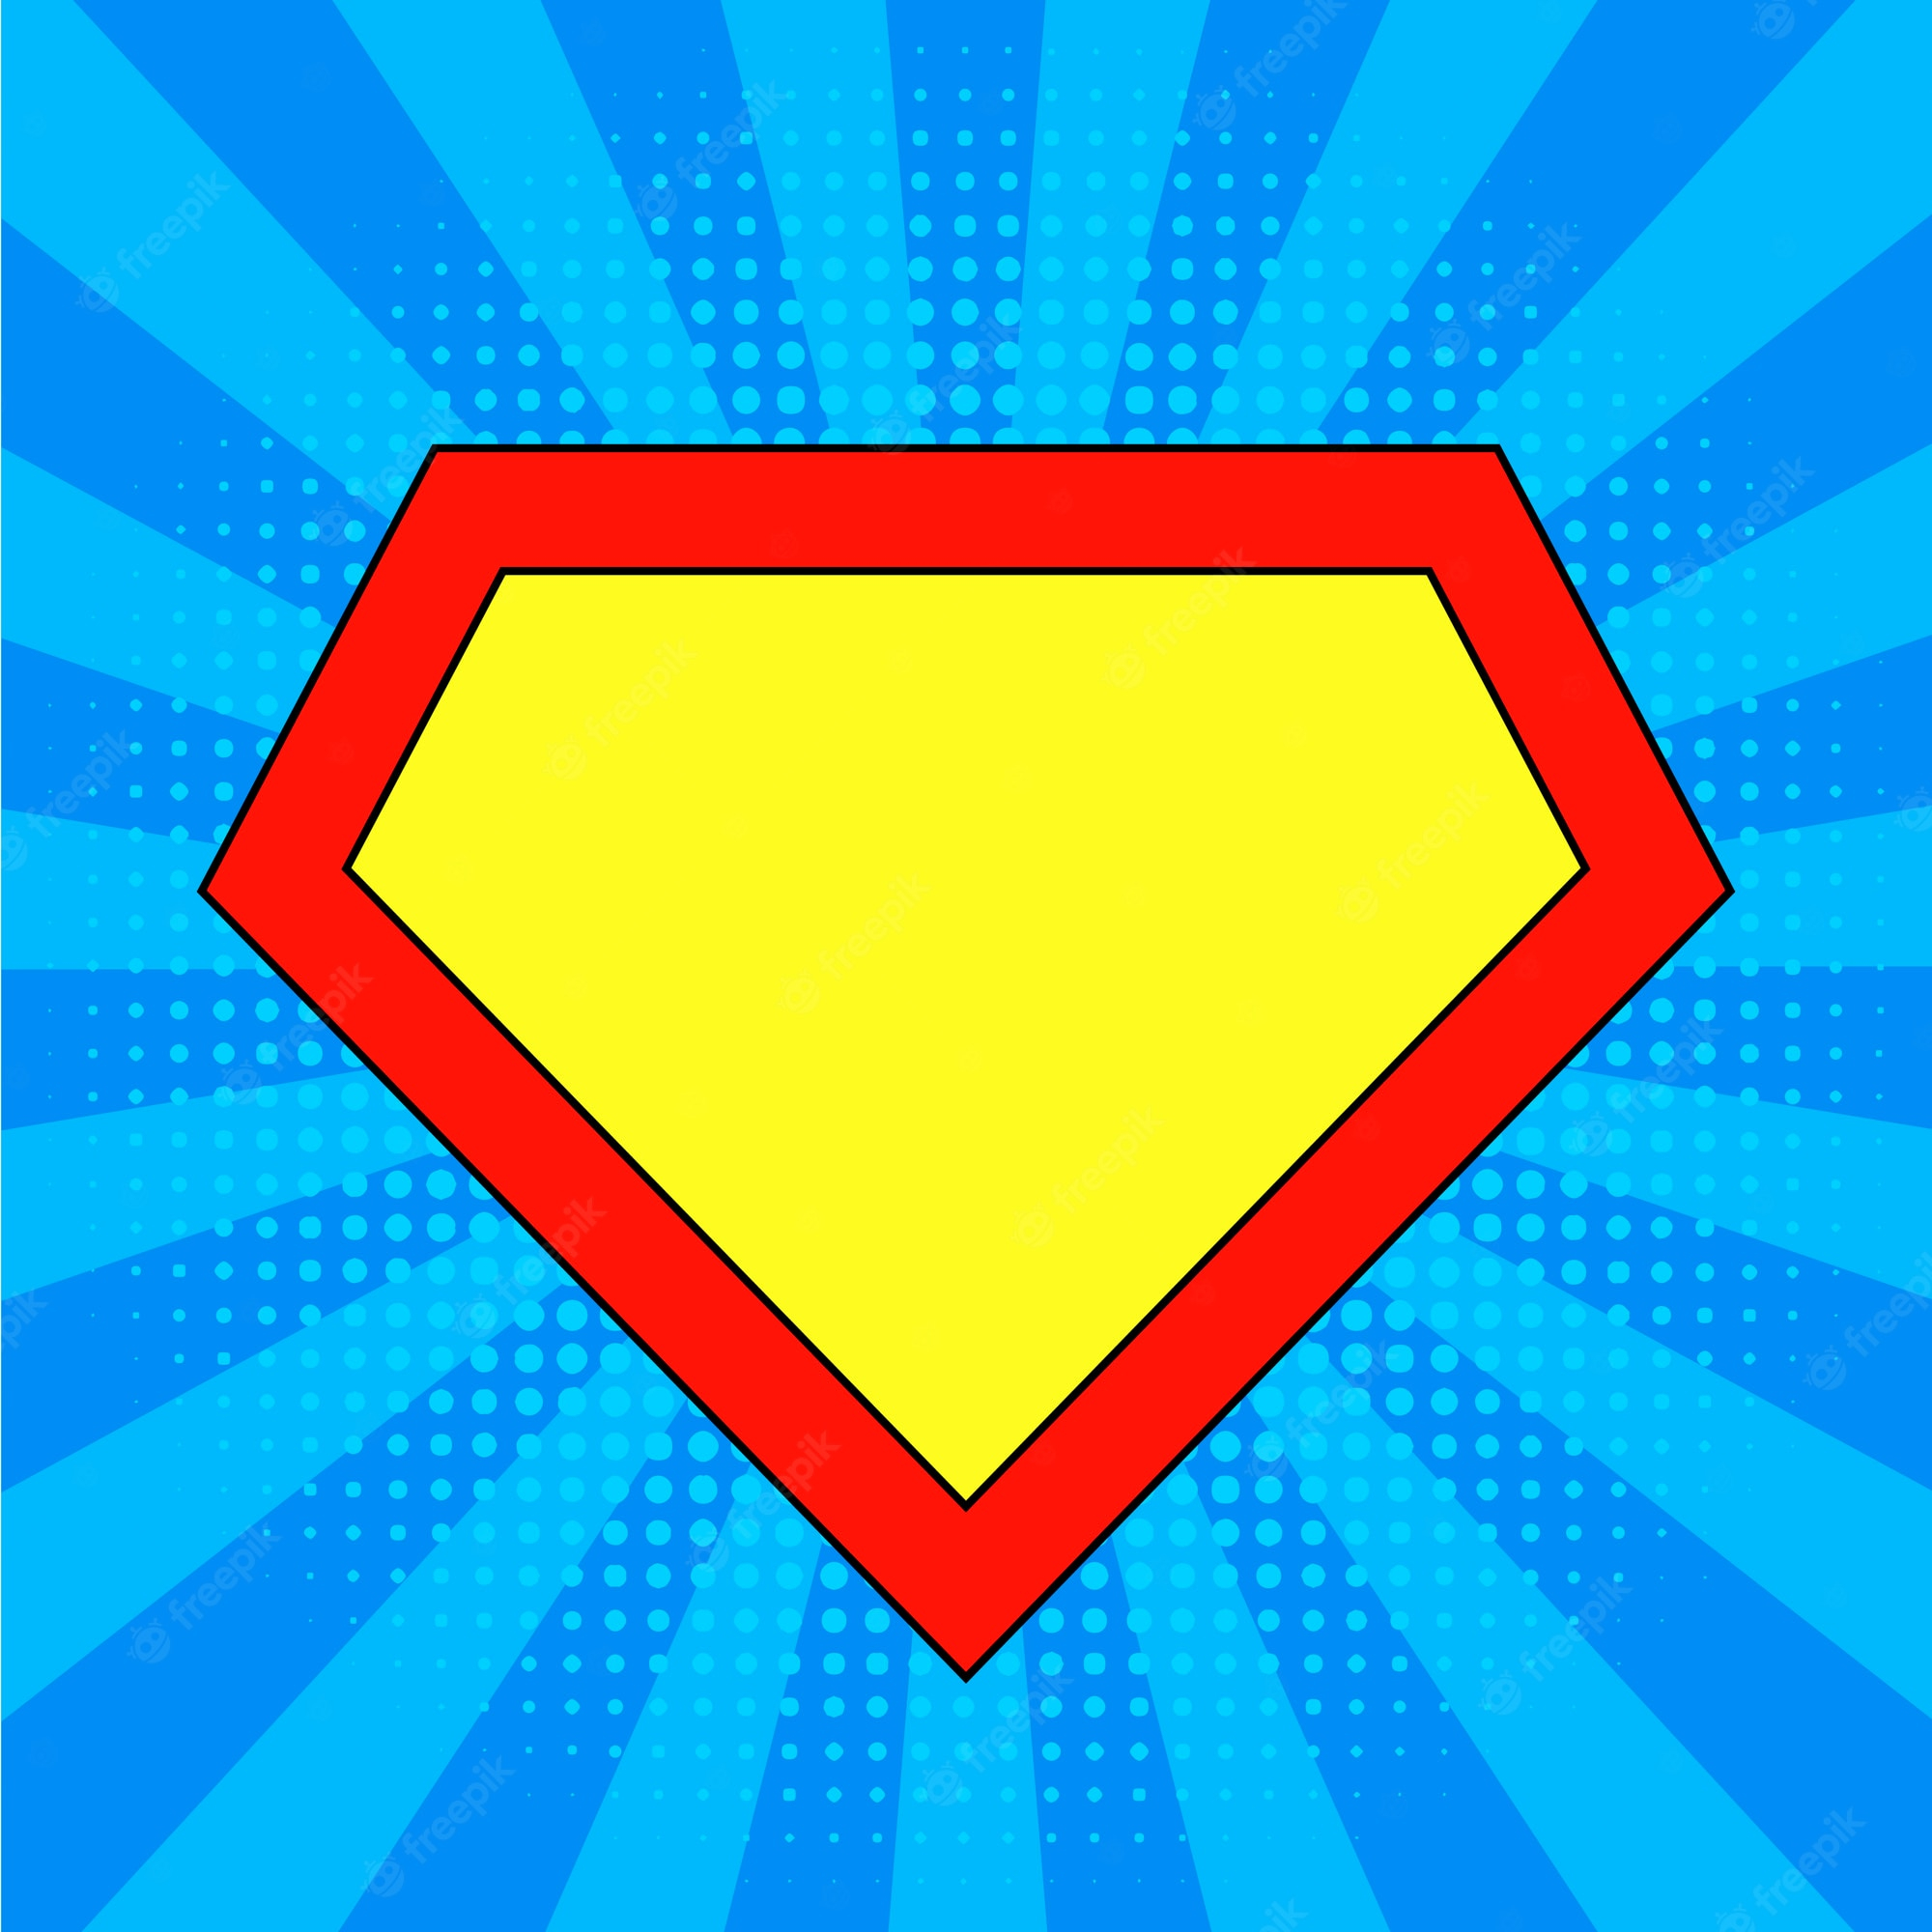 Superman symbol Images  Free Vectors, Stock Photos & PSD Pertaining To Blank Superman Logo Template